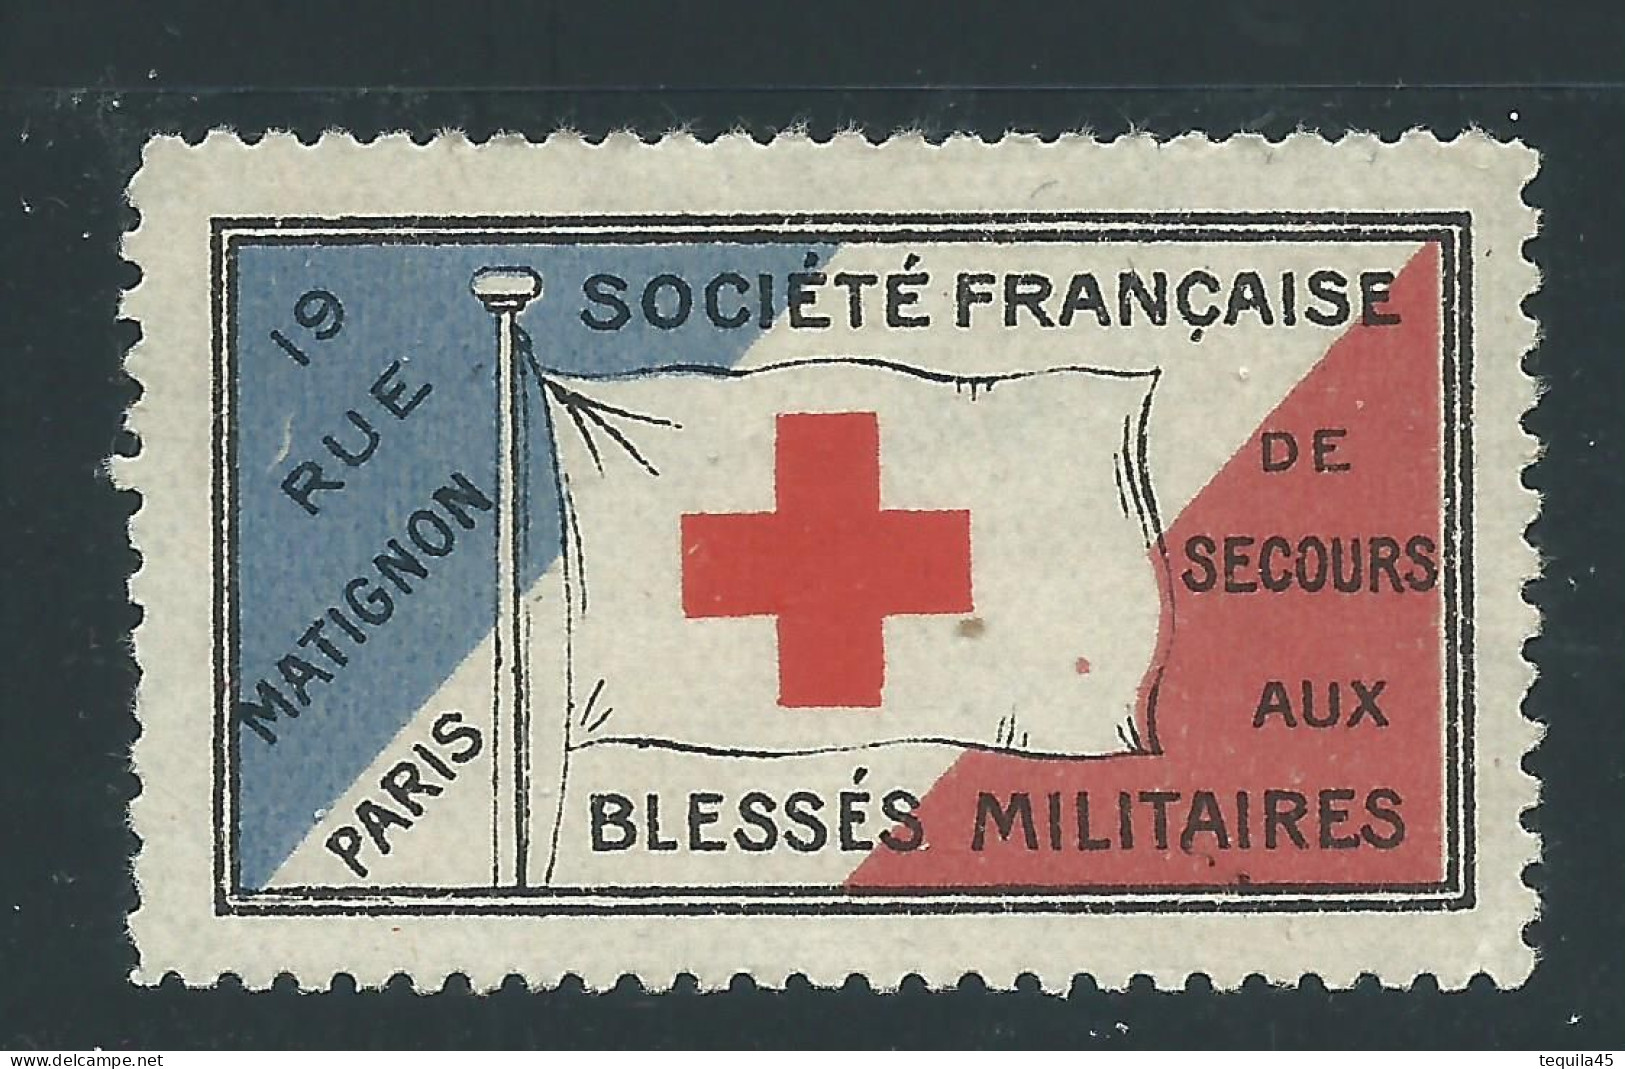 VIGNETTE DELANDRE - Secours Blessés Militaires - France - WWI WW1 Cinderella Poster Stamp Grande Guerre 1914 1918 - Rotes Kreuz